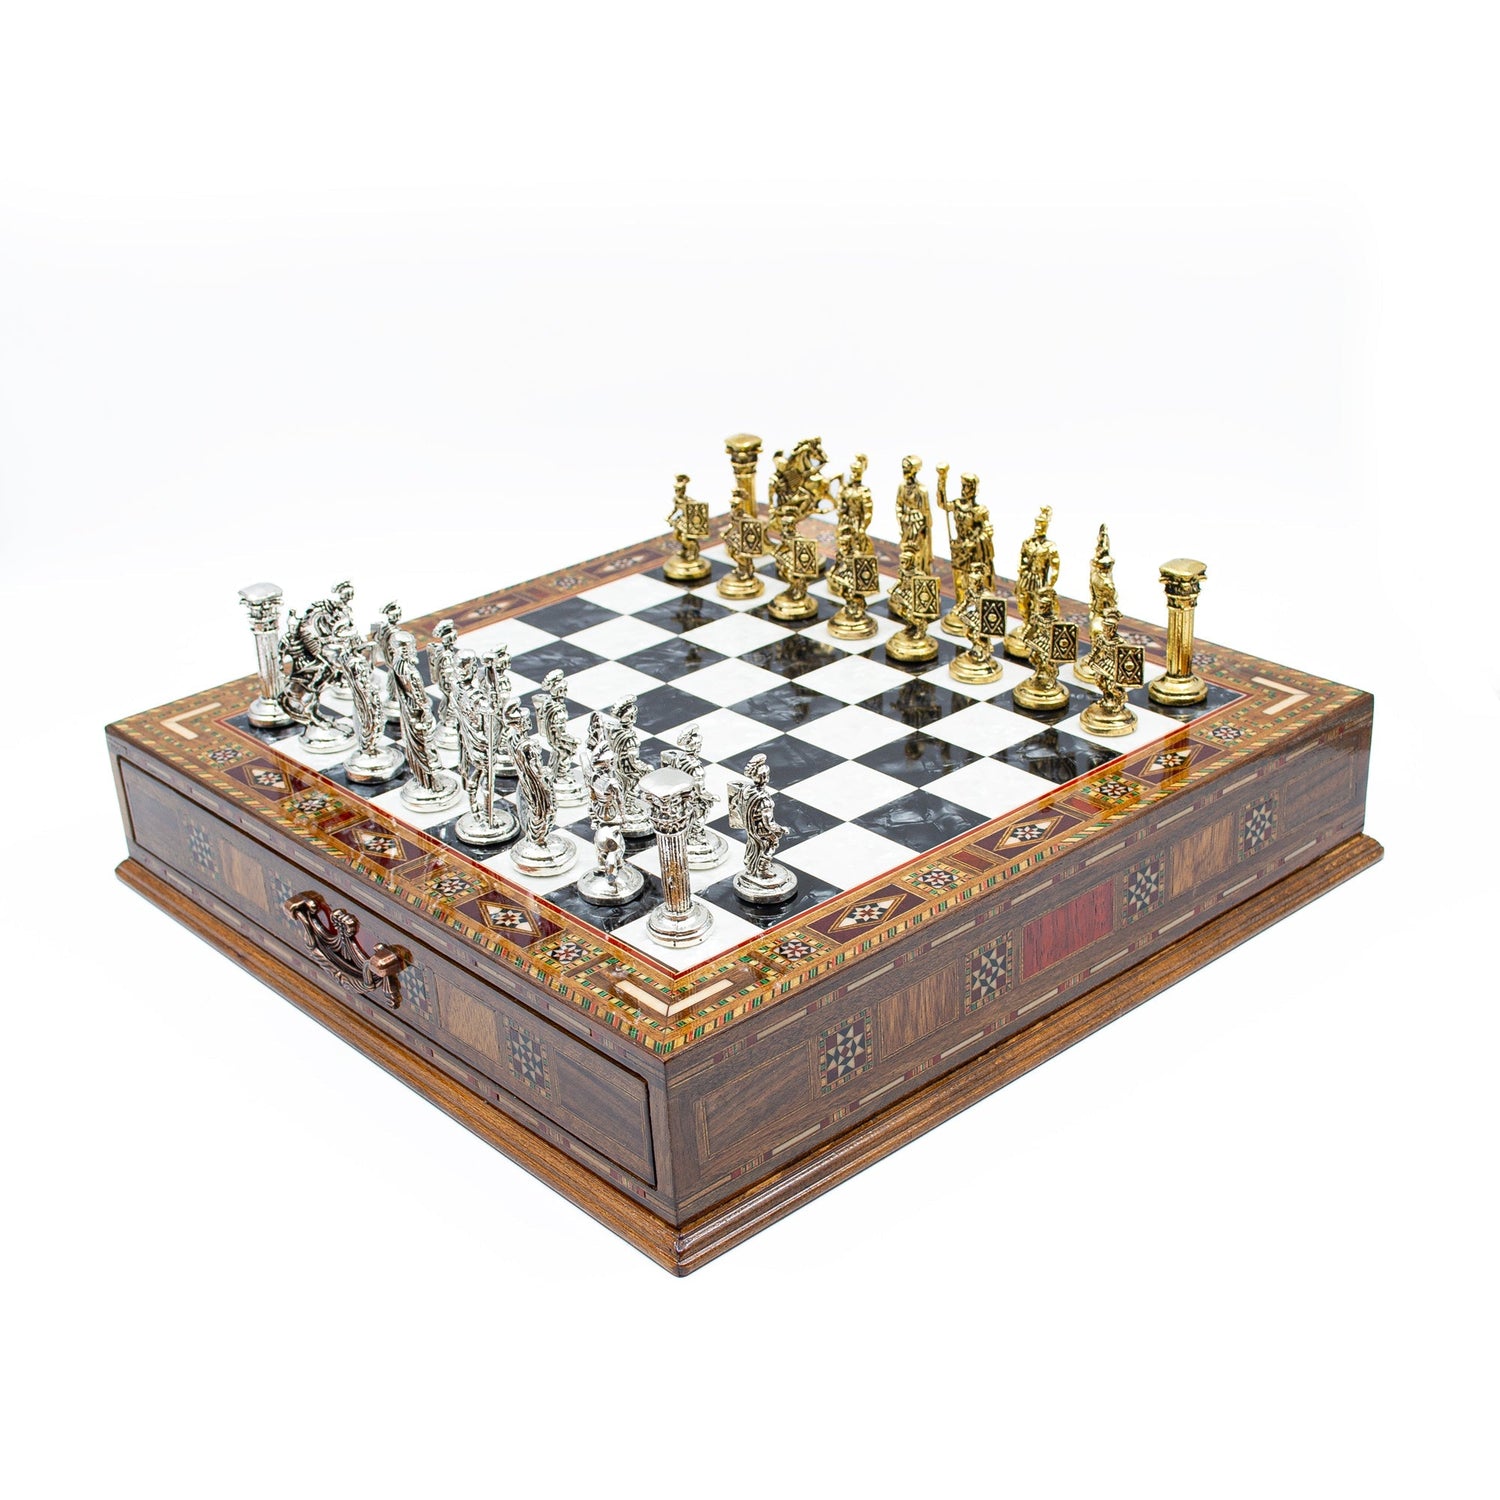 Handmade Chess Set - Black: Premium Wood with Metal Pieces - Ketohandcraft